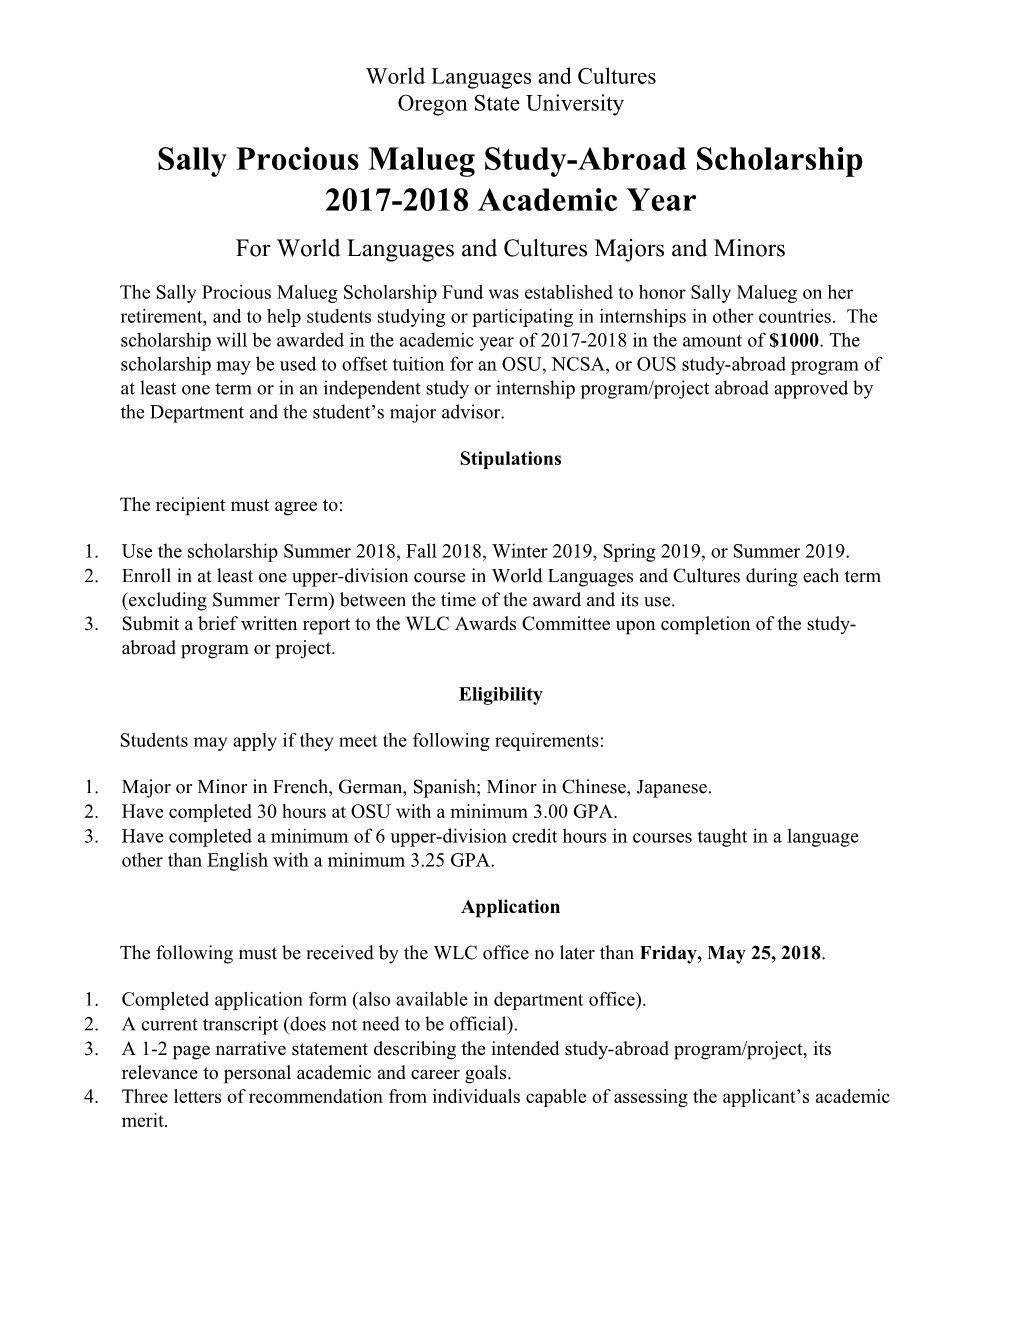 Sally Procious Malueg Study-Abroad Scholarship